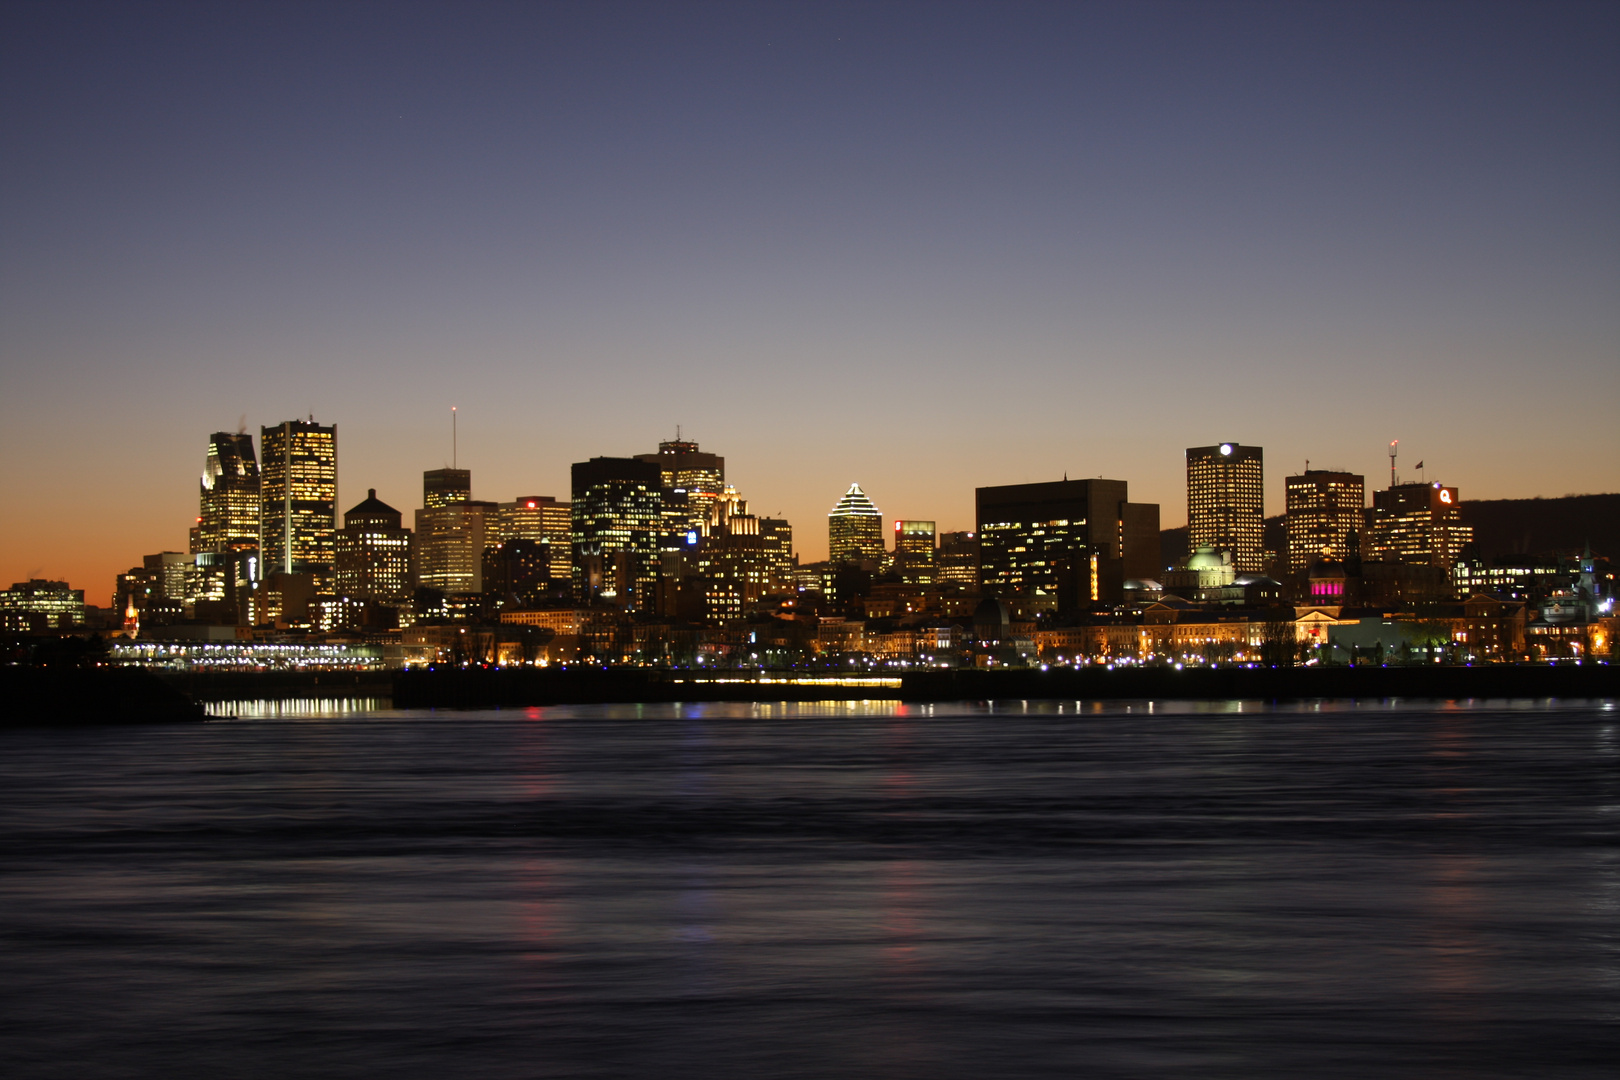 Montreal's skyline by night